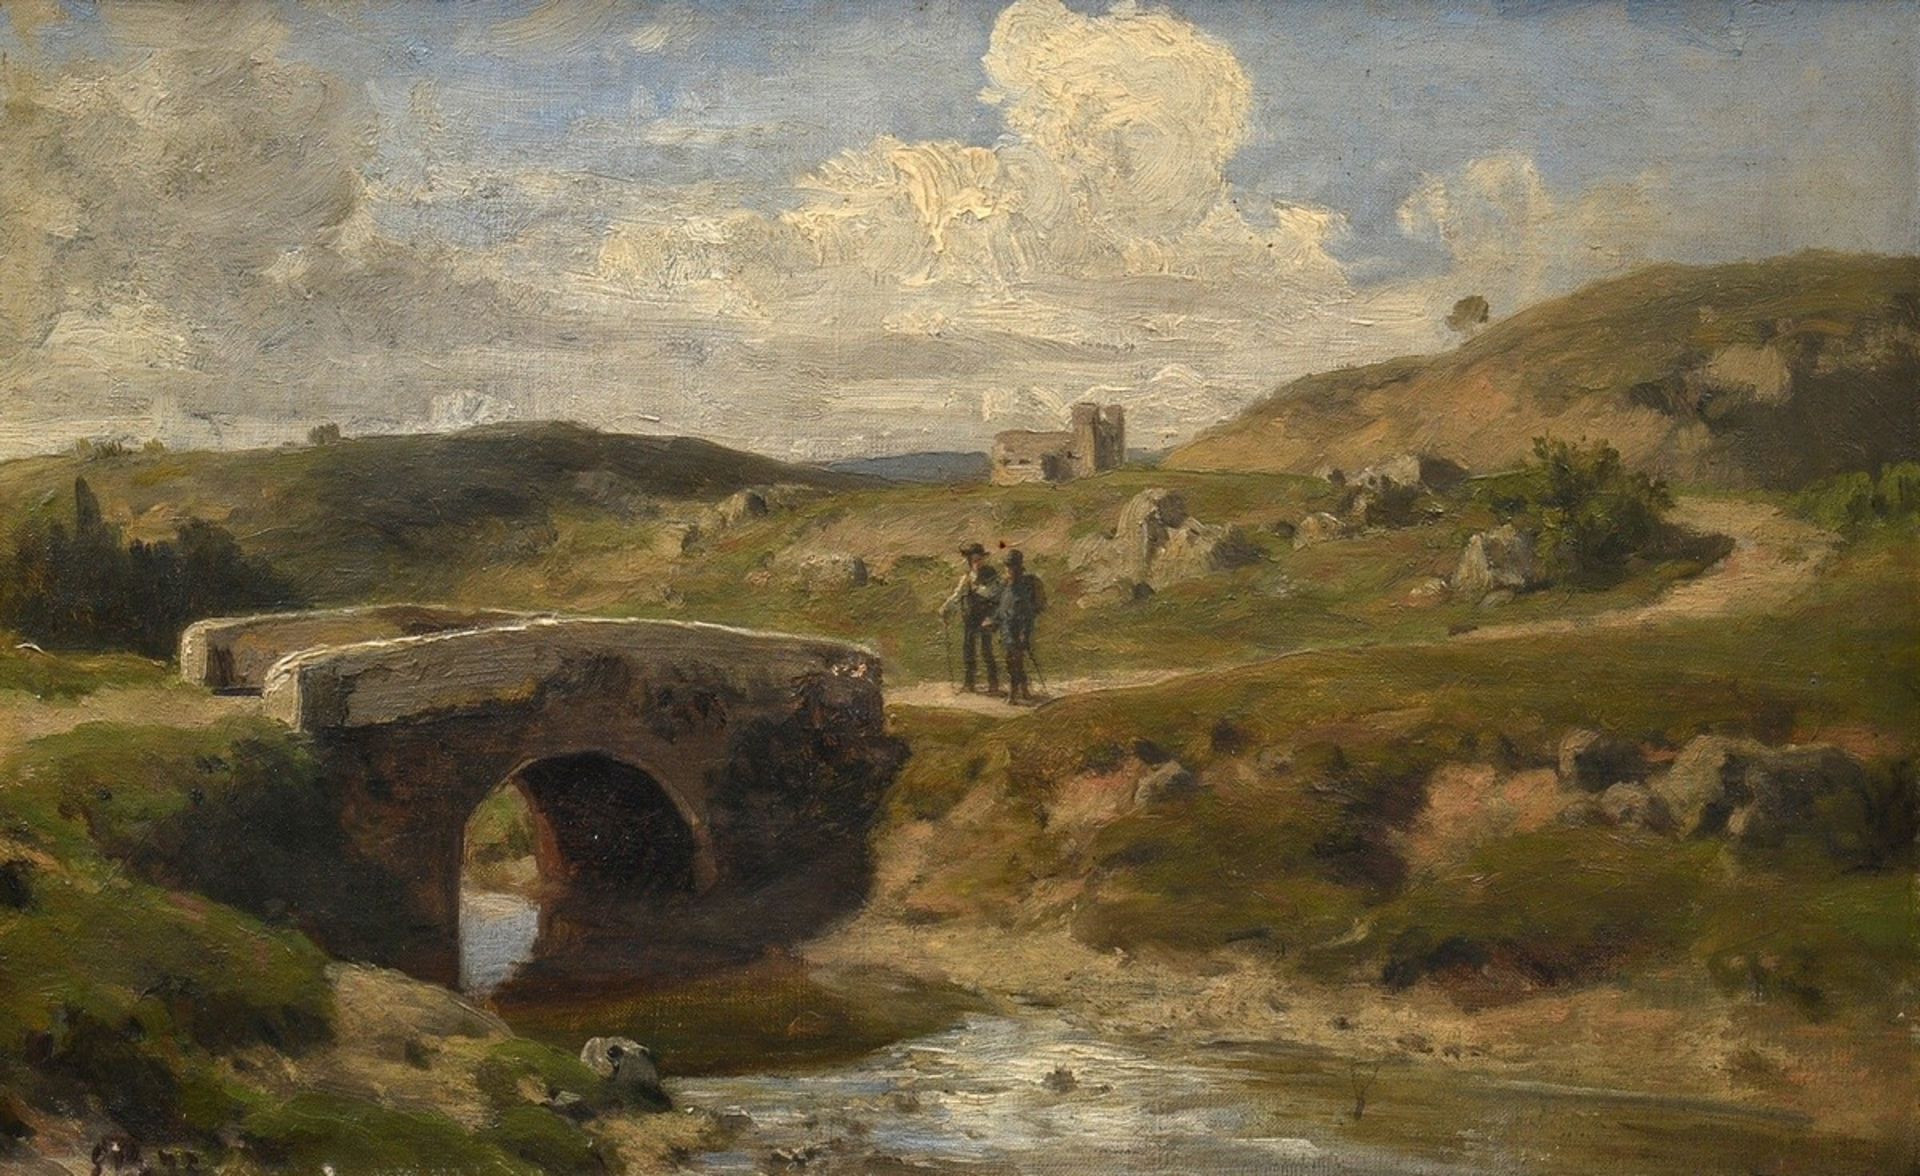 Unbekannter Künstler des 19.Jh. „Zwei Wanderer in hügeliger Landschaft“ 1873, Öl/Leinwand, u.l. mon